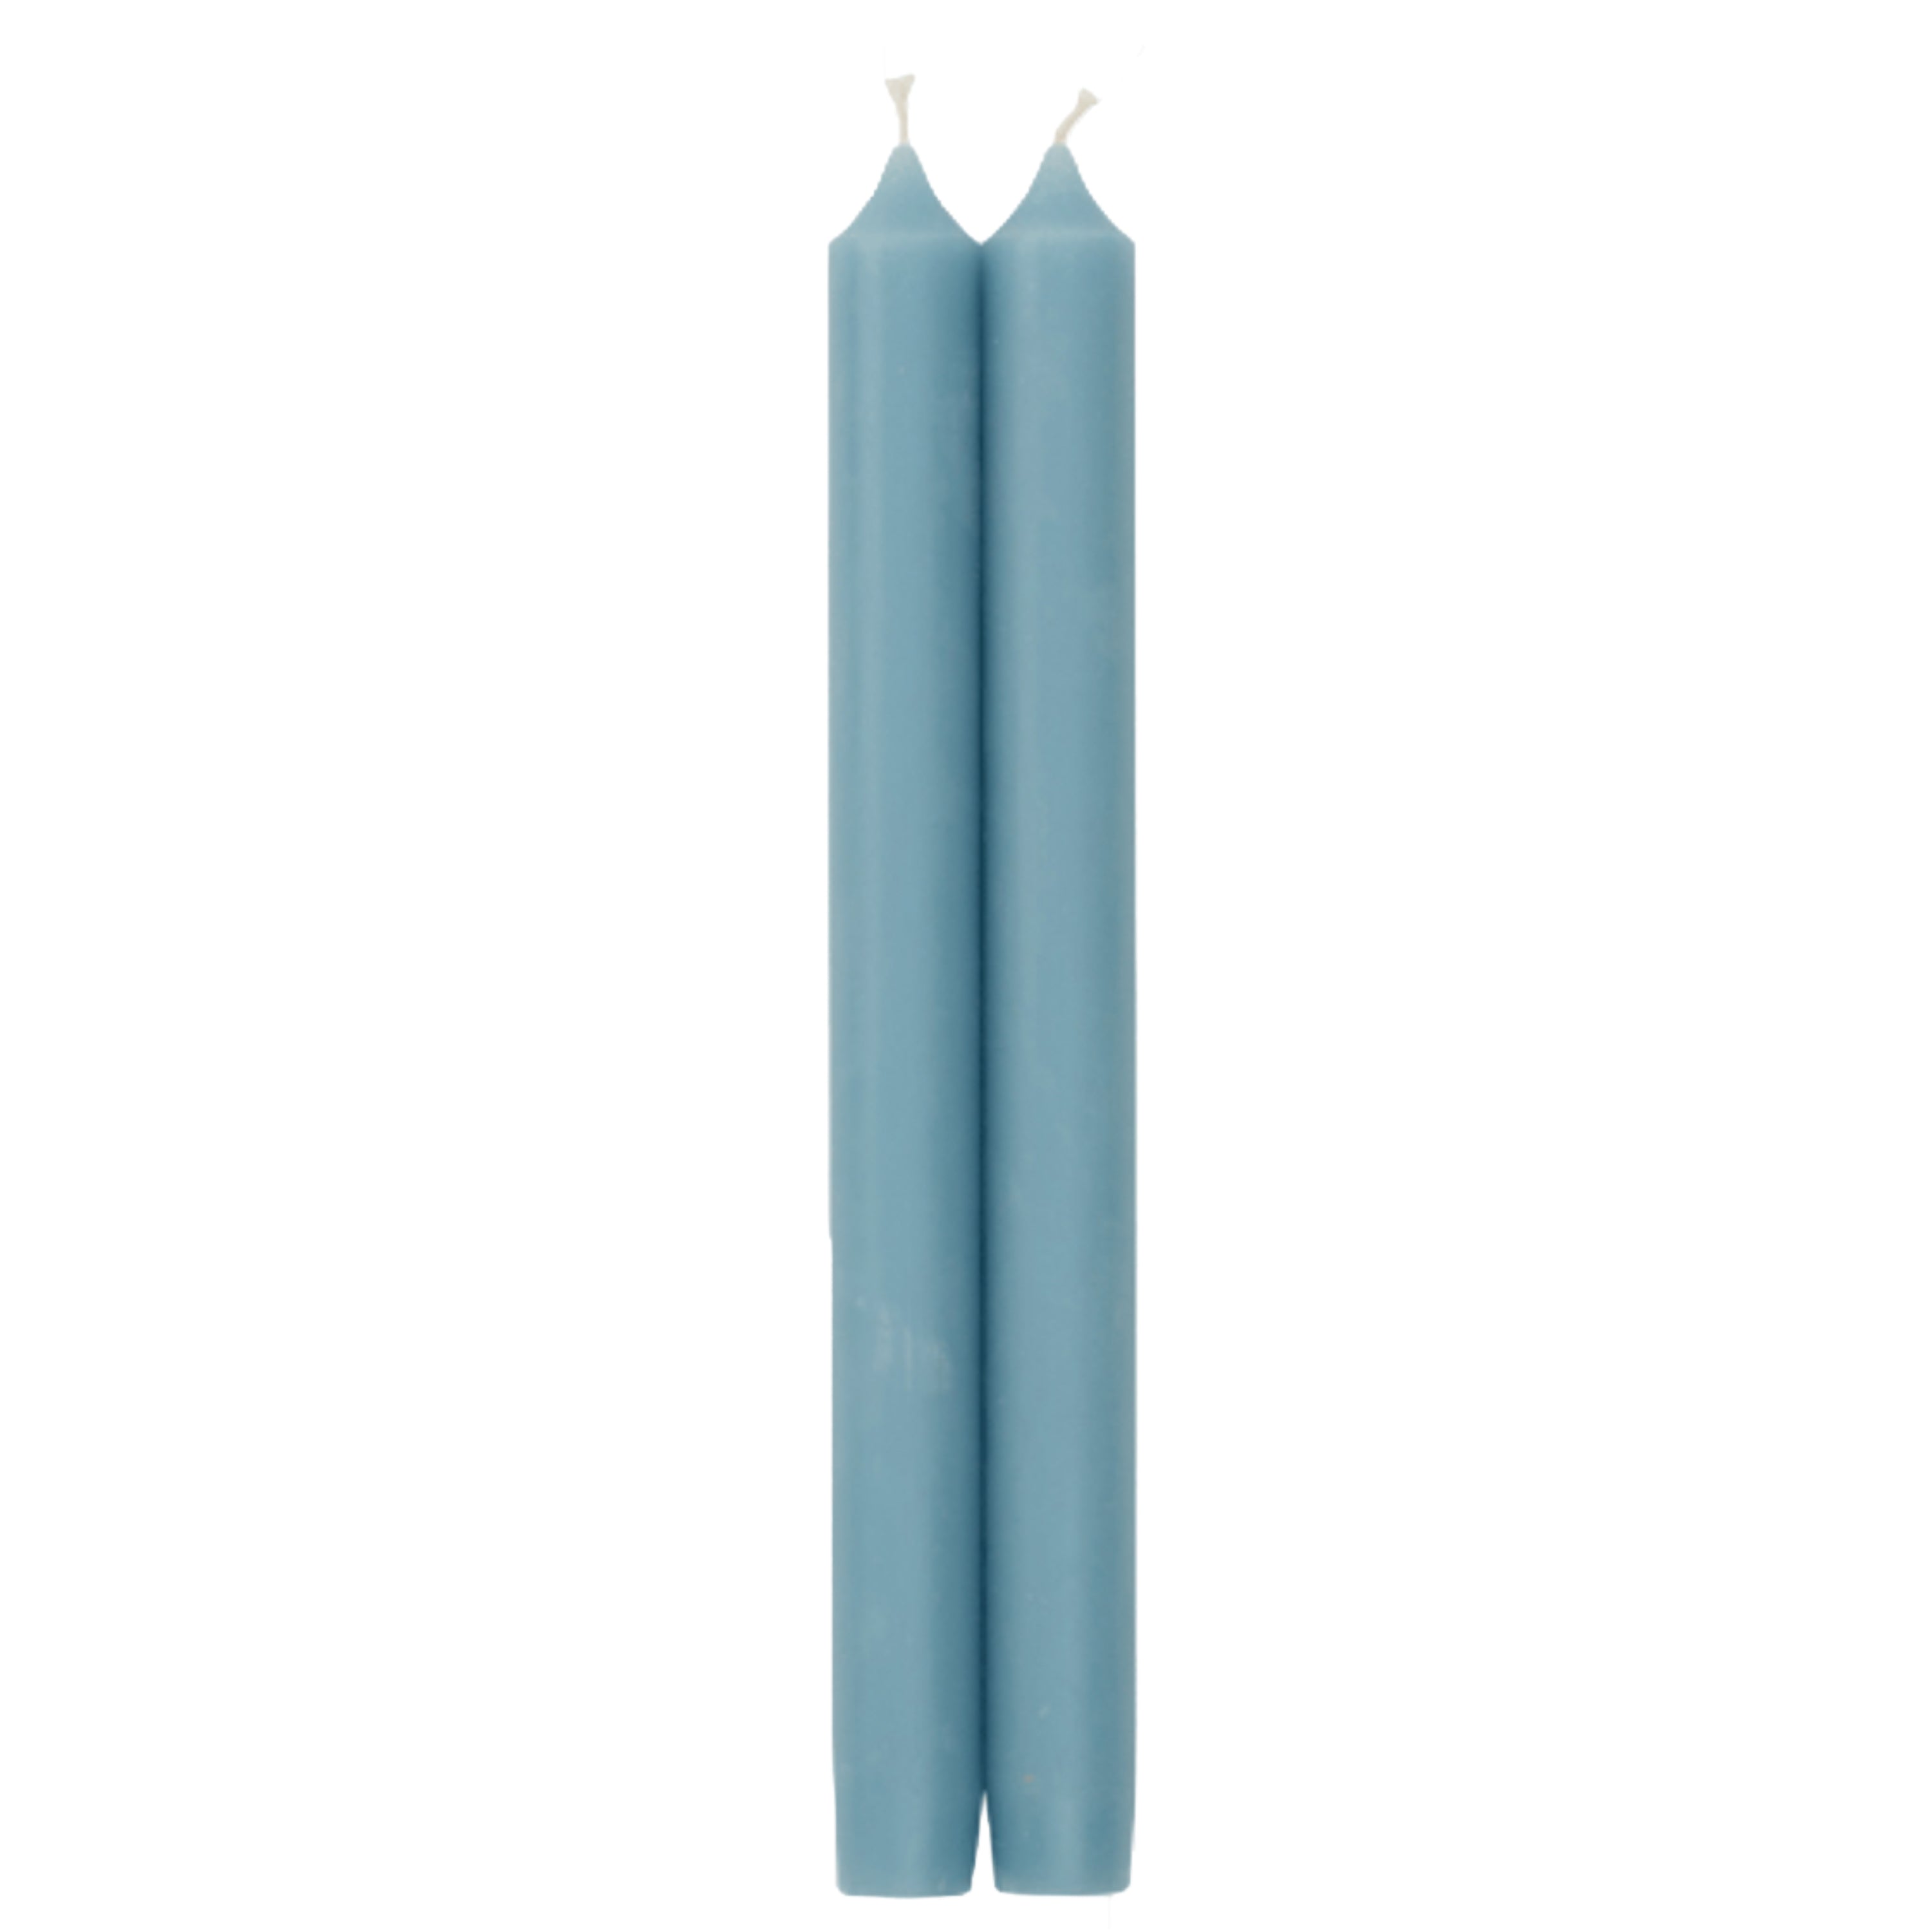 Caspari Tapered Candles in Stone Blue – 10inch – 2pk